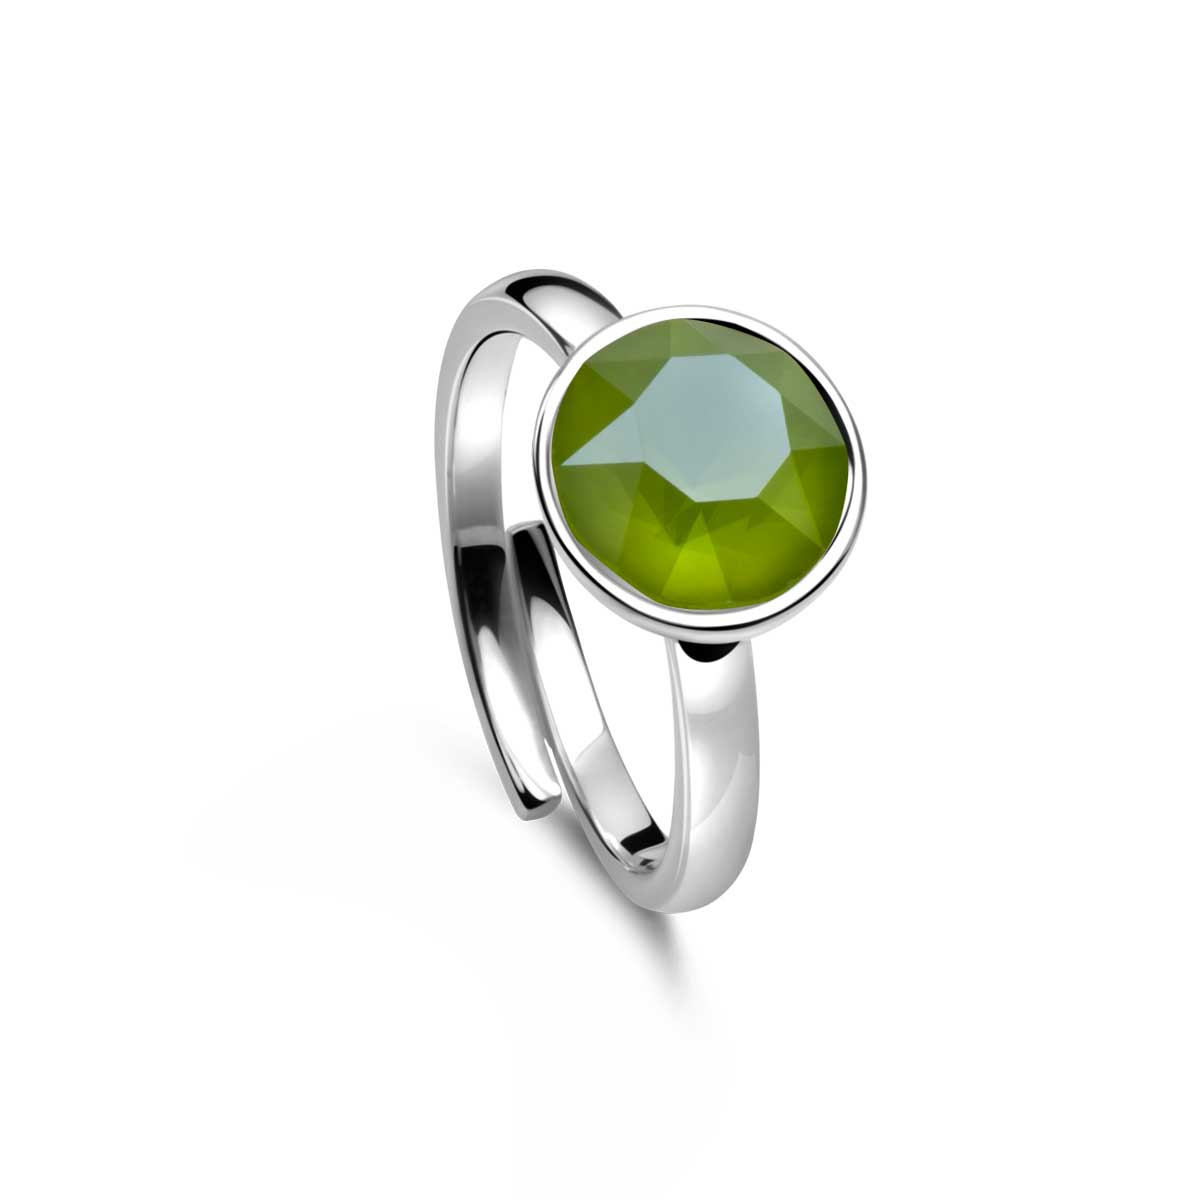 Ring 925 Silber grün peridot verstellbar#oberflache_silber